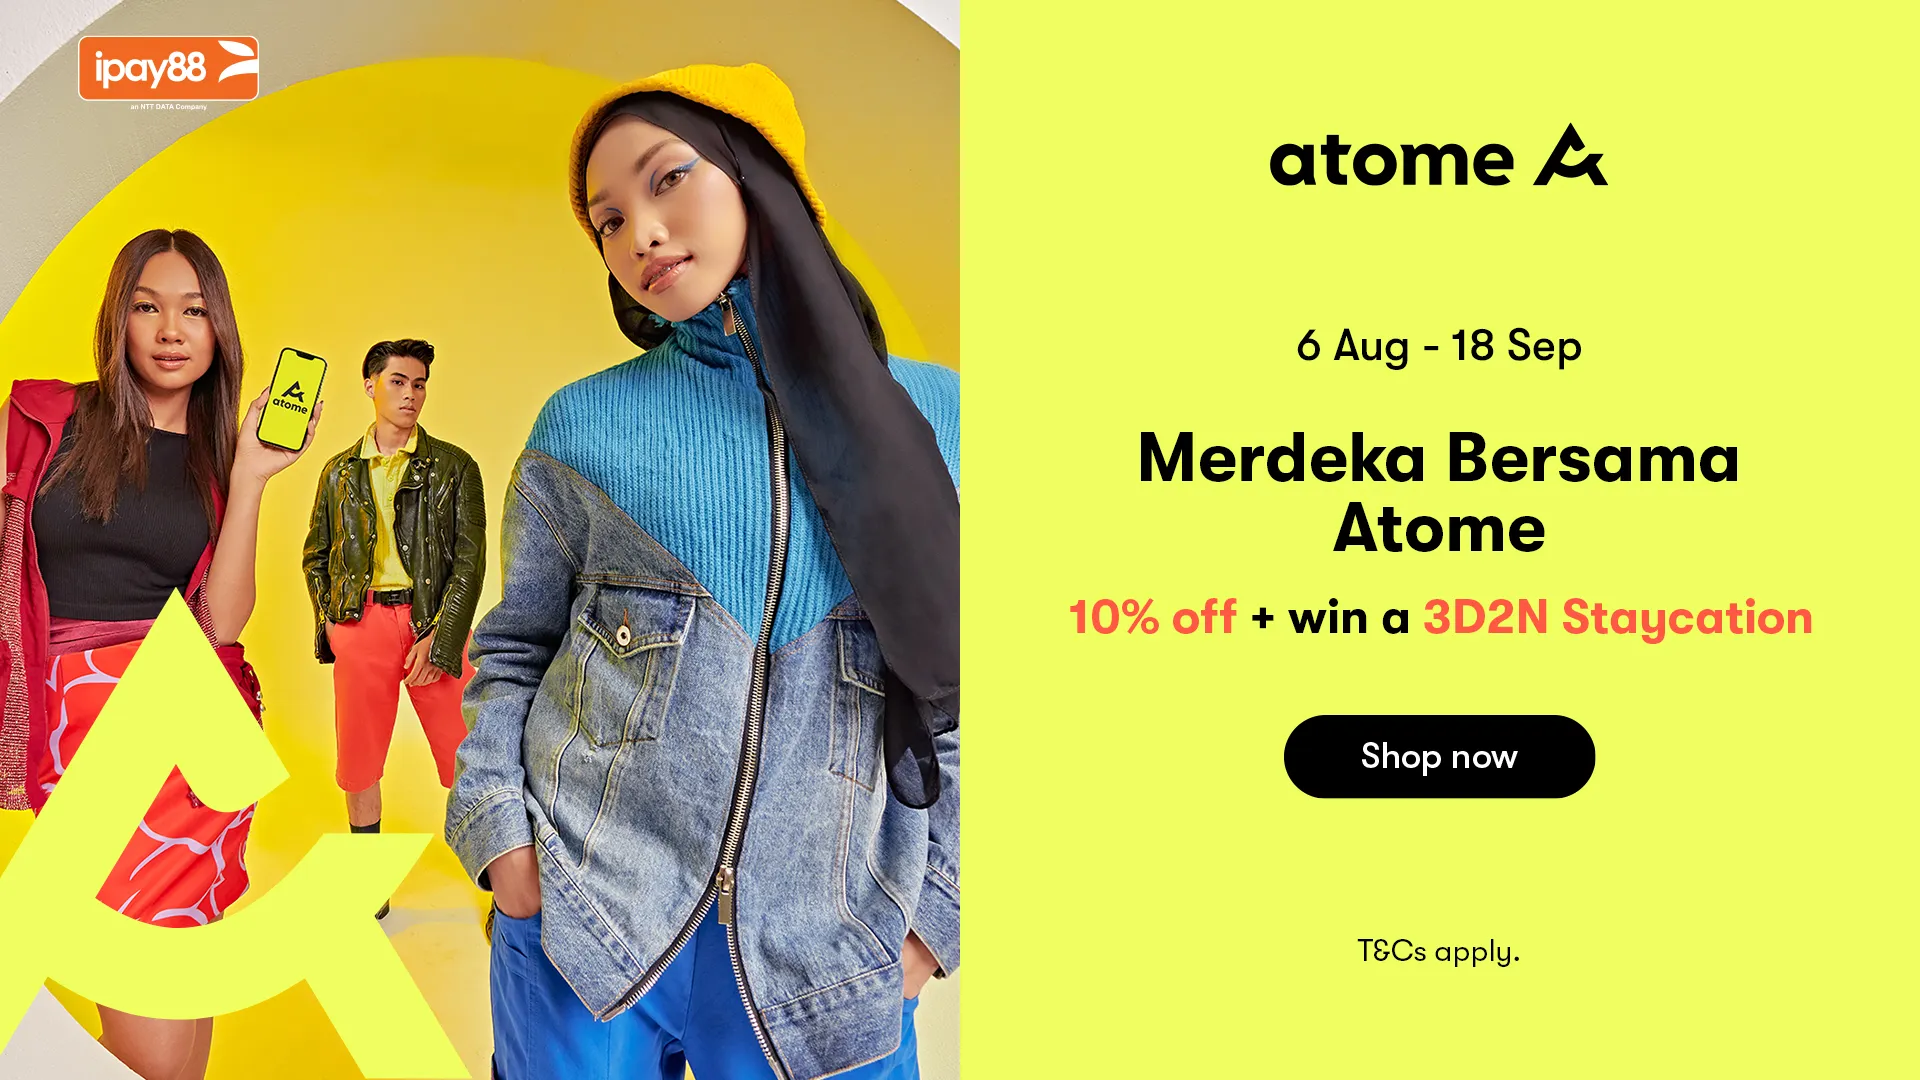 Merdeka bersama Atome - Buy Now Pay Later Malaysia iPay88